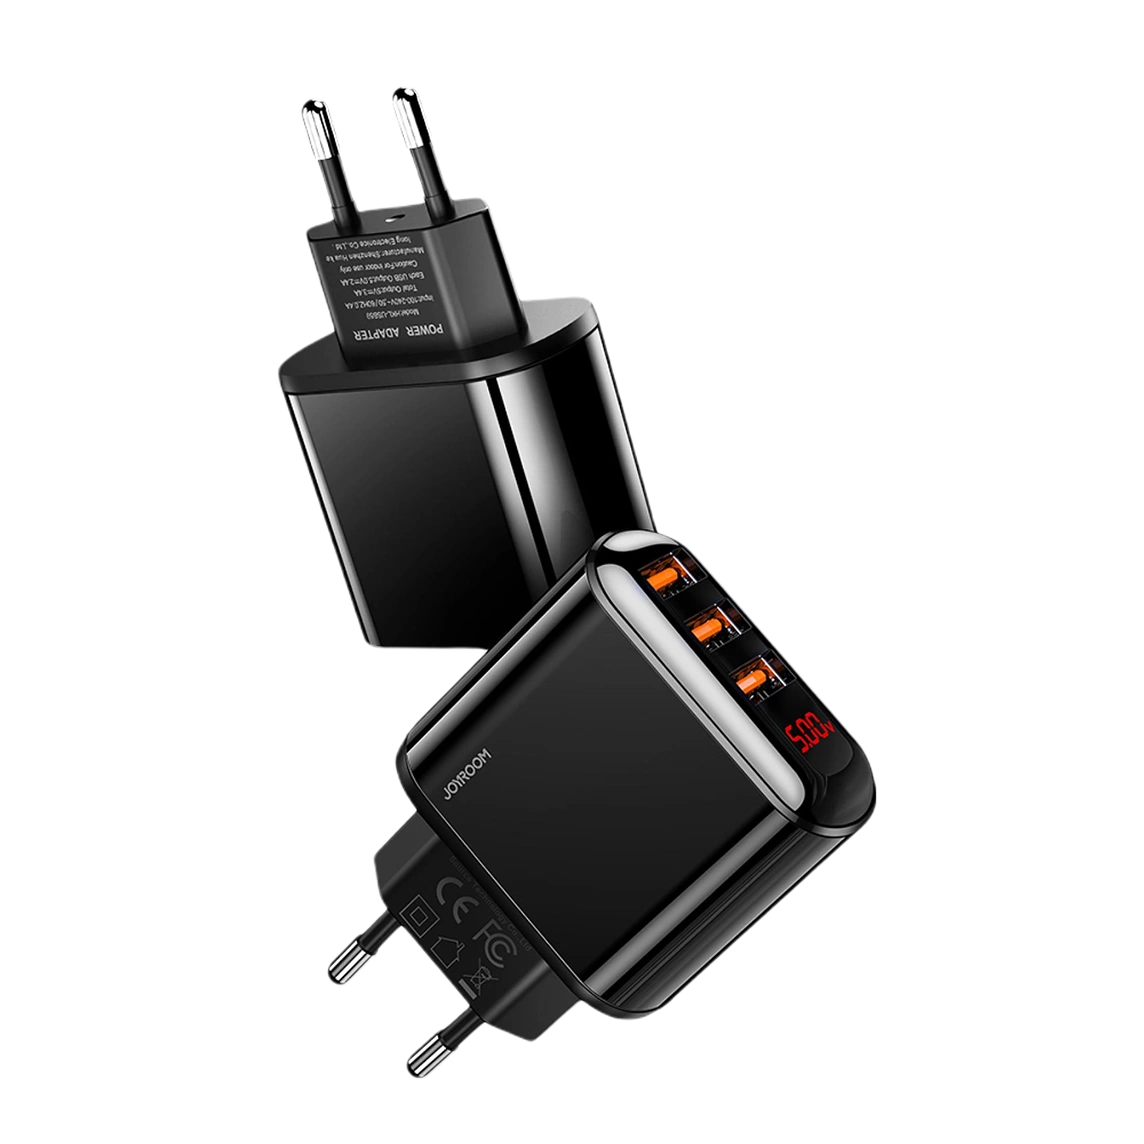 شارژر فست شارژ جوی روم مدل HKL-USB59